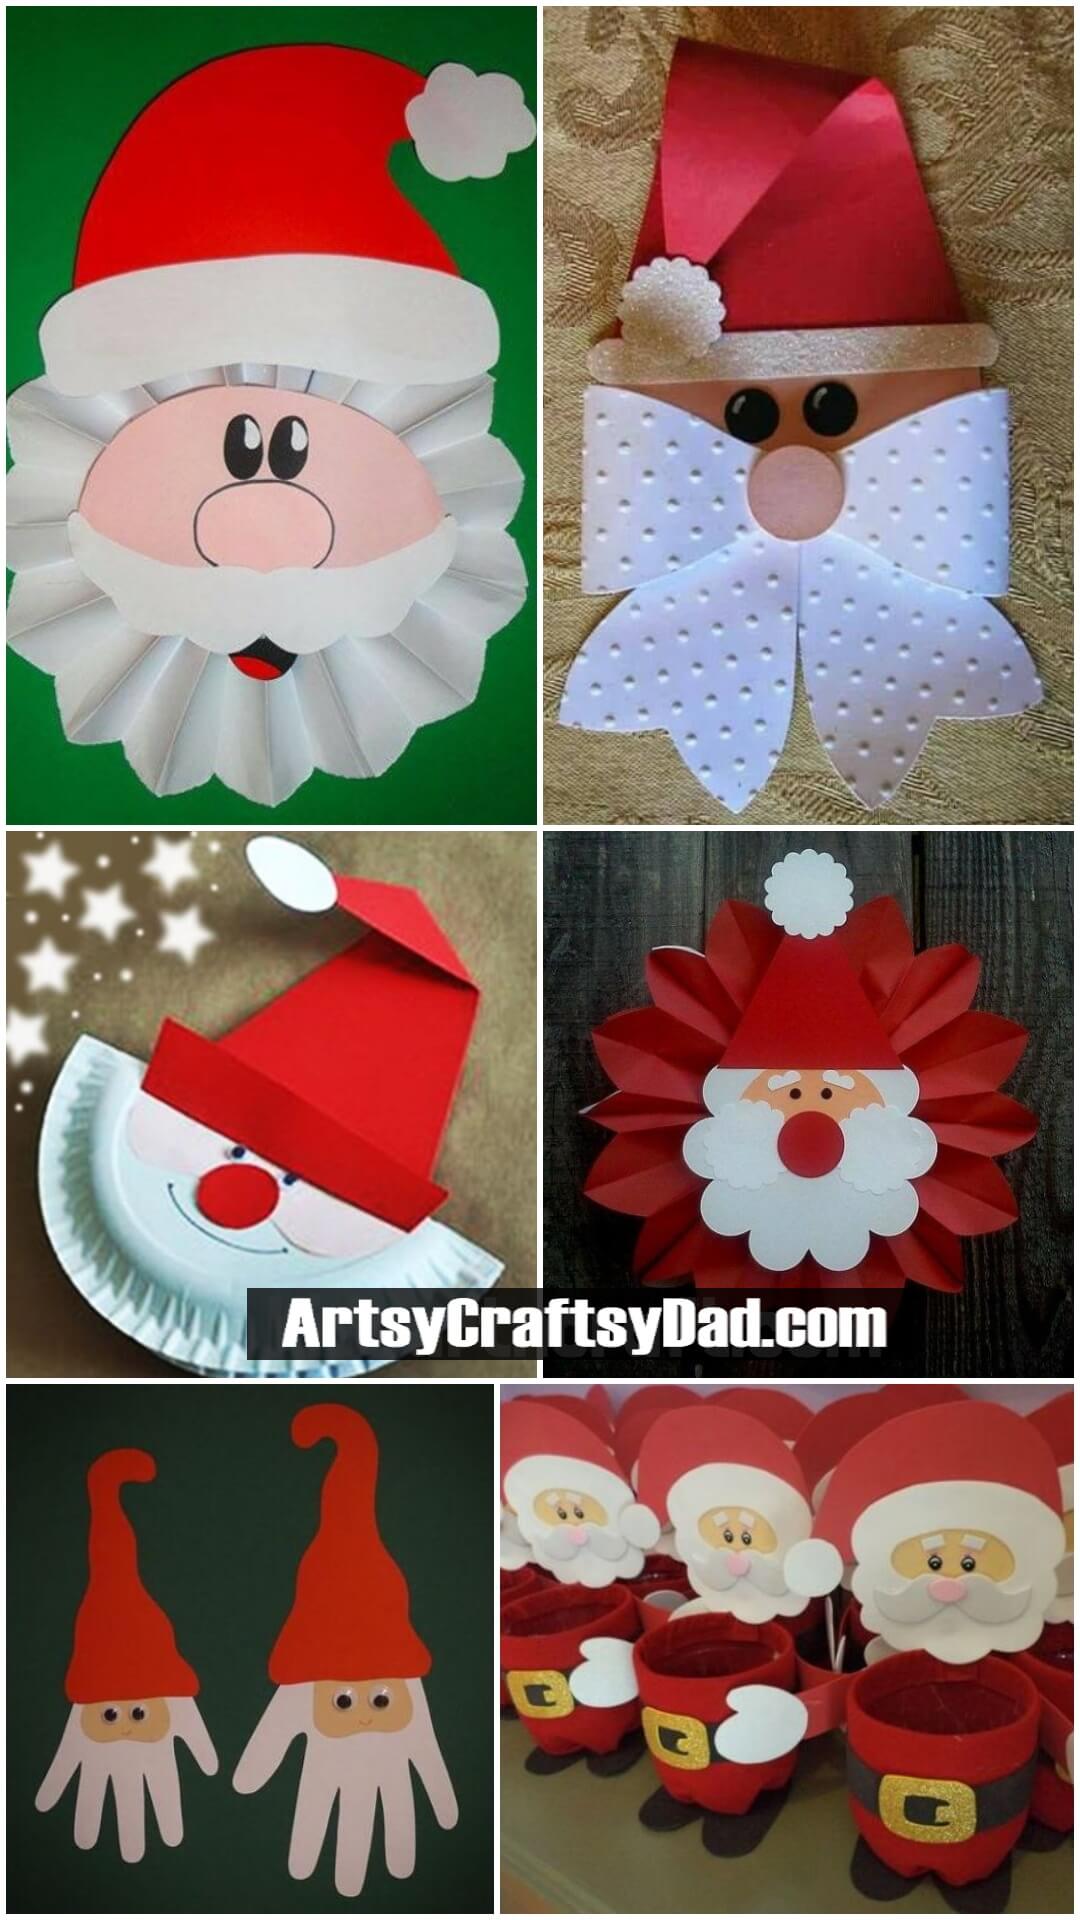 Santa Claus Craft Ideas for Kids